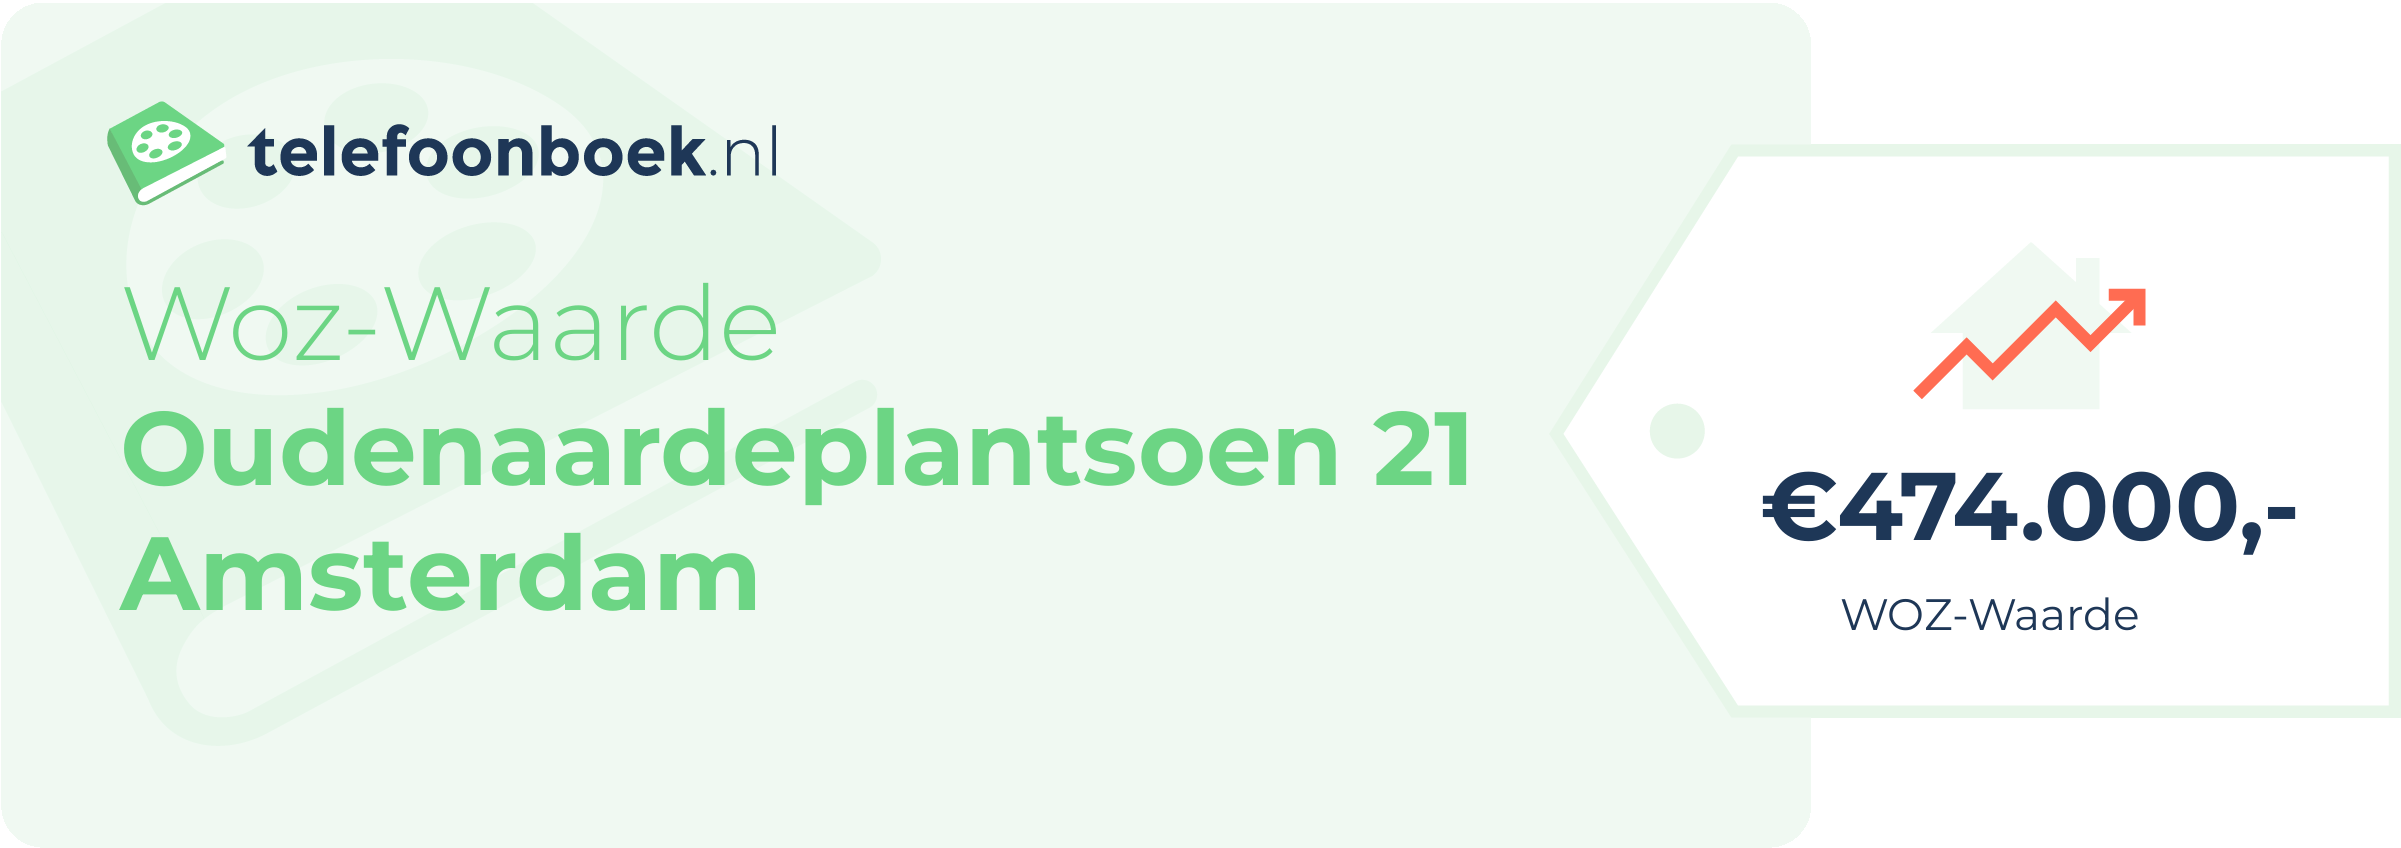 WOZ-waarde Oudenaardeplantsoen 21 Amsterdam